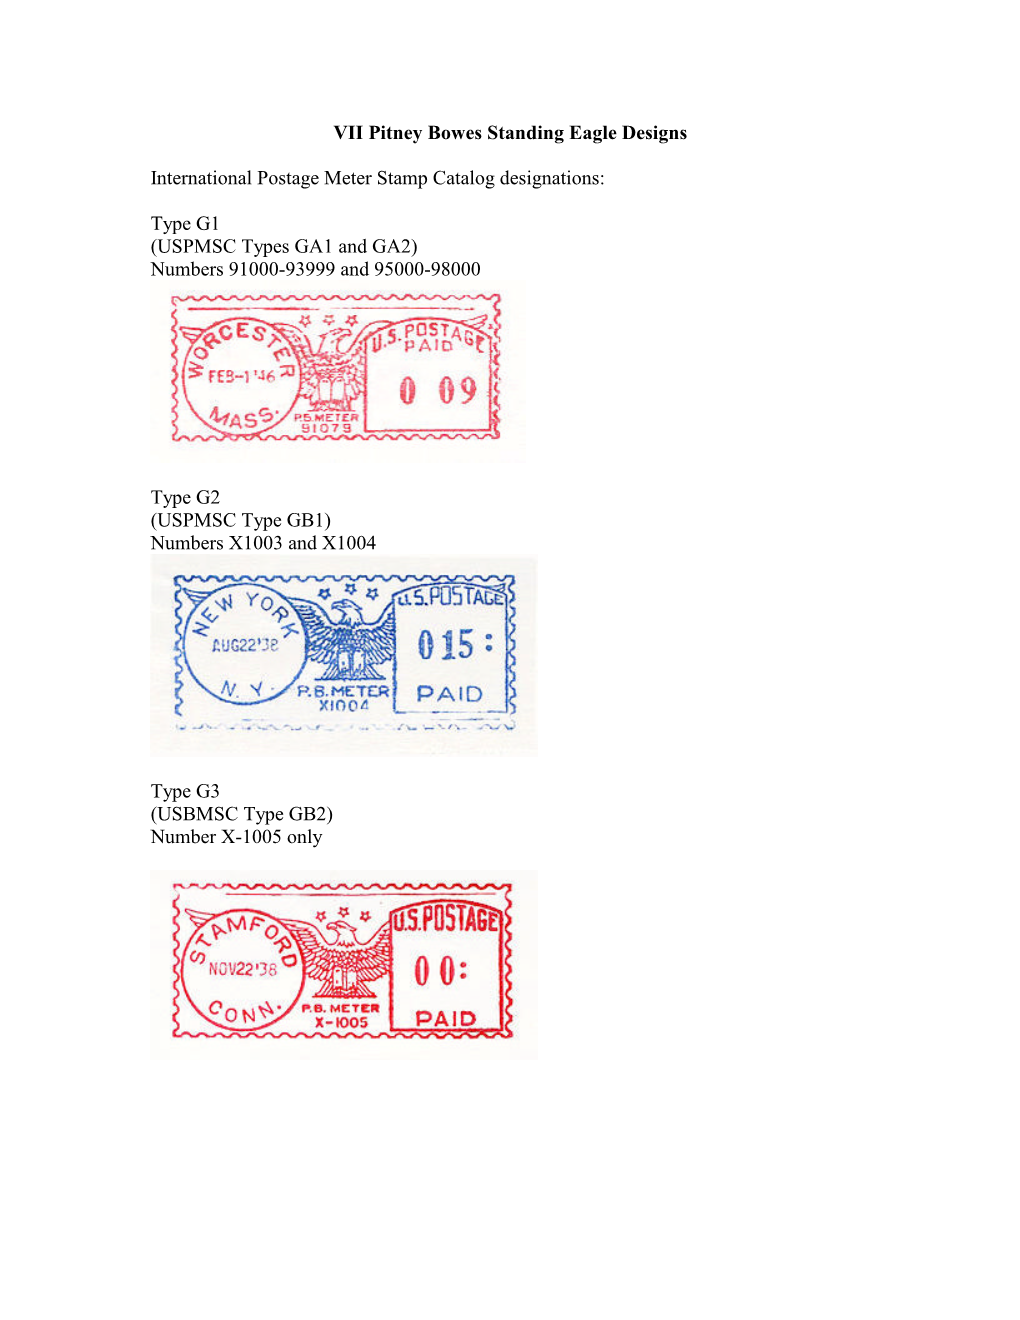 VII Pitney Bowes Standing Eagle Designs International Postage Meter Stamp Catalog Designations: Type G1 (USPMSC Types GA1 and GA